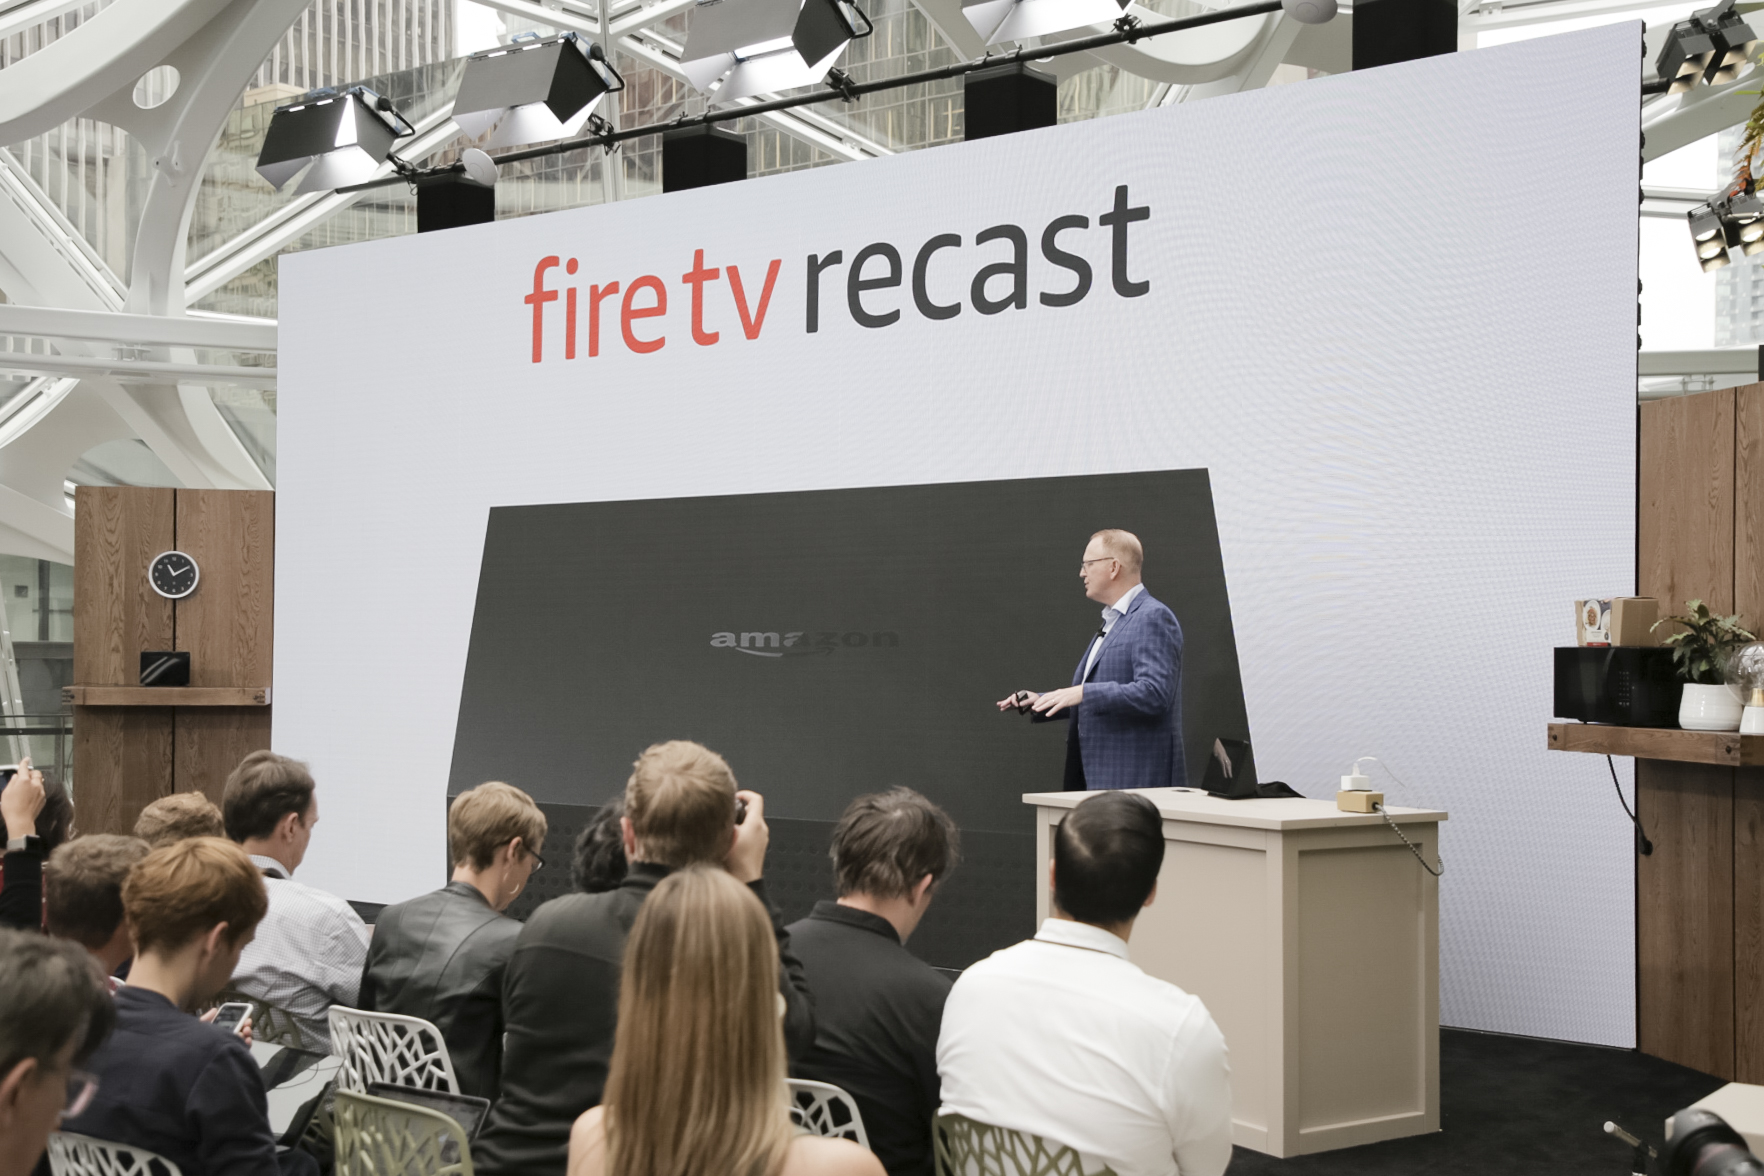 Fire TV Recast